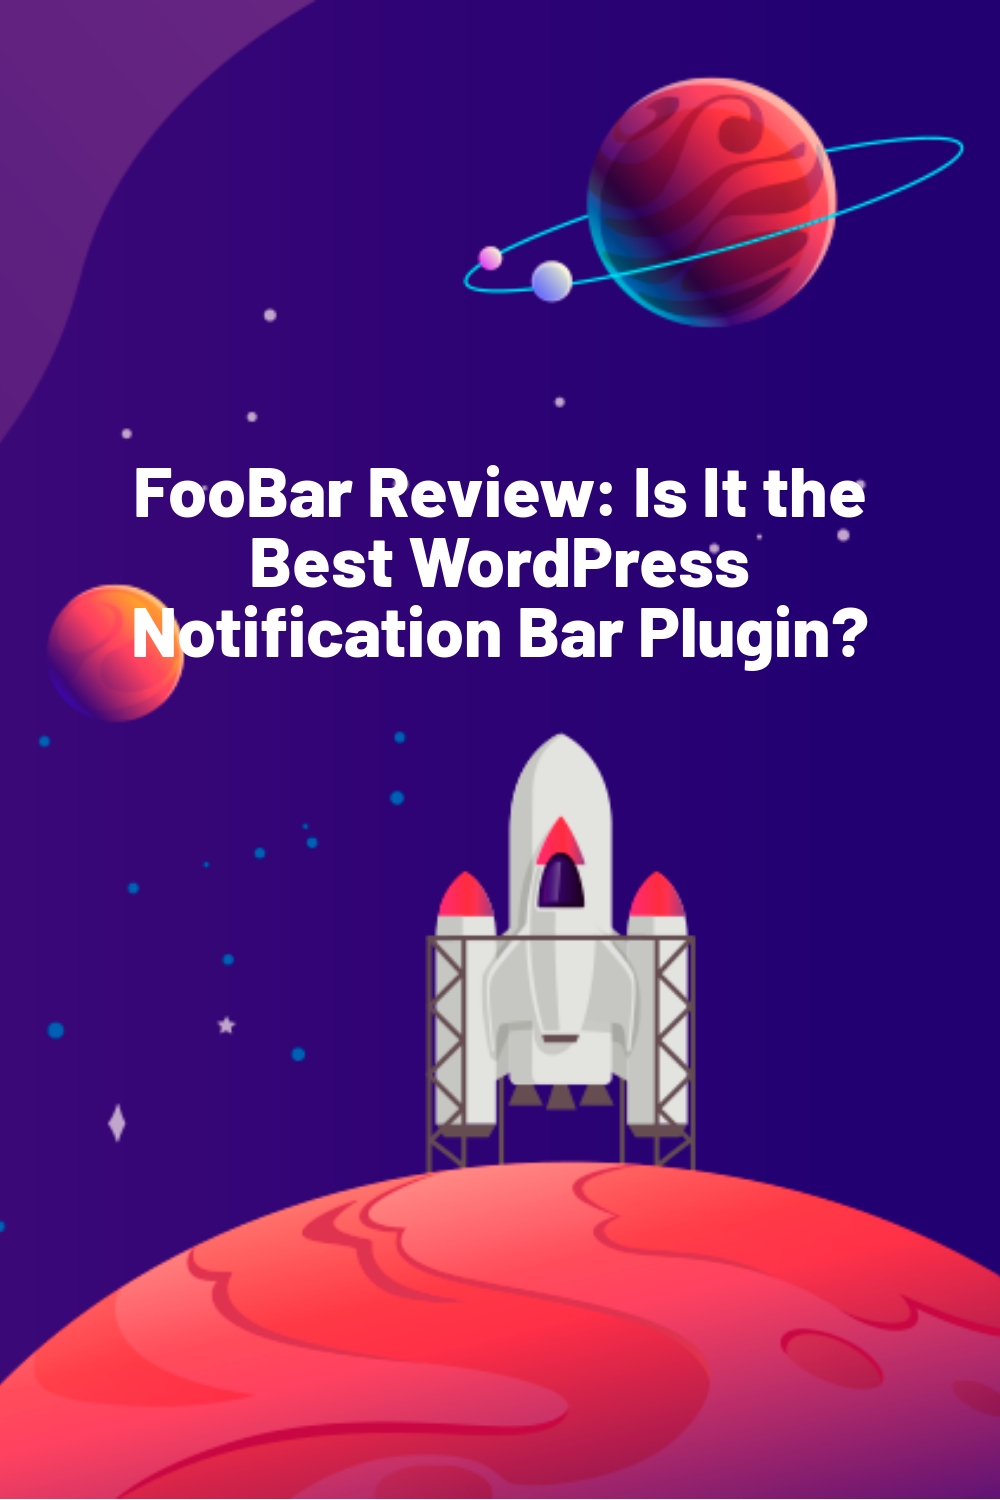 FooBar Review: Is It the Best WordPress Notification Bar Plugin?